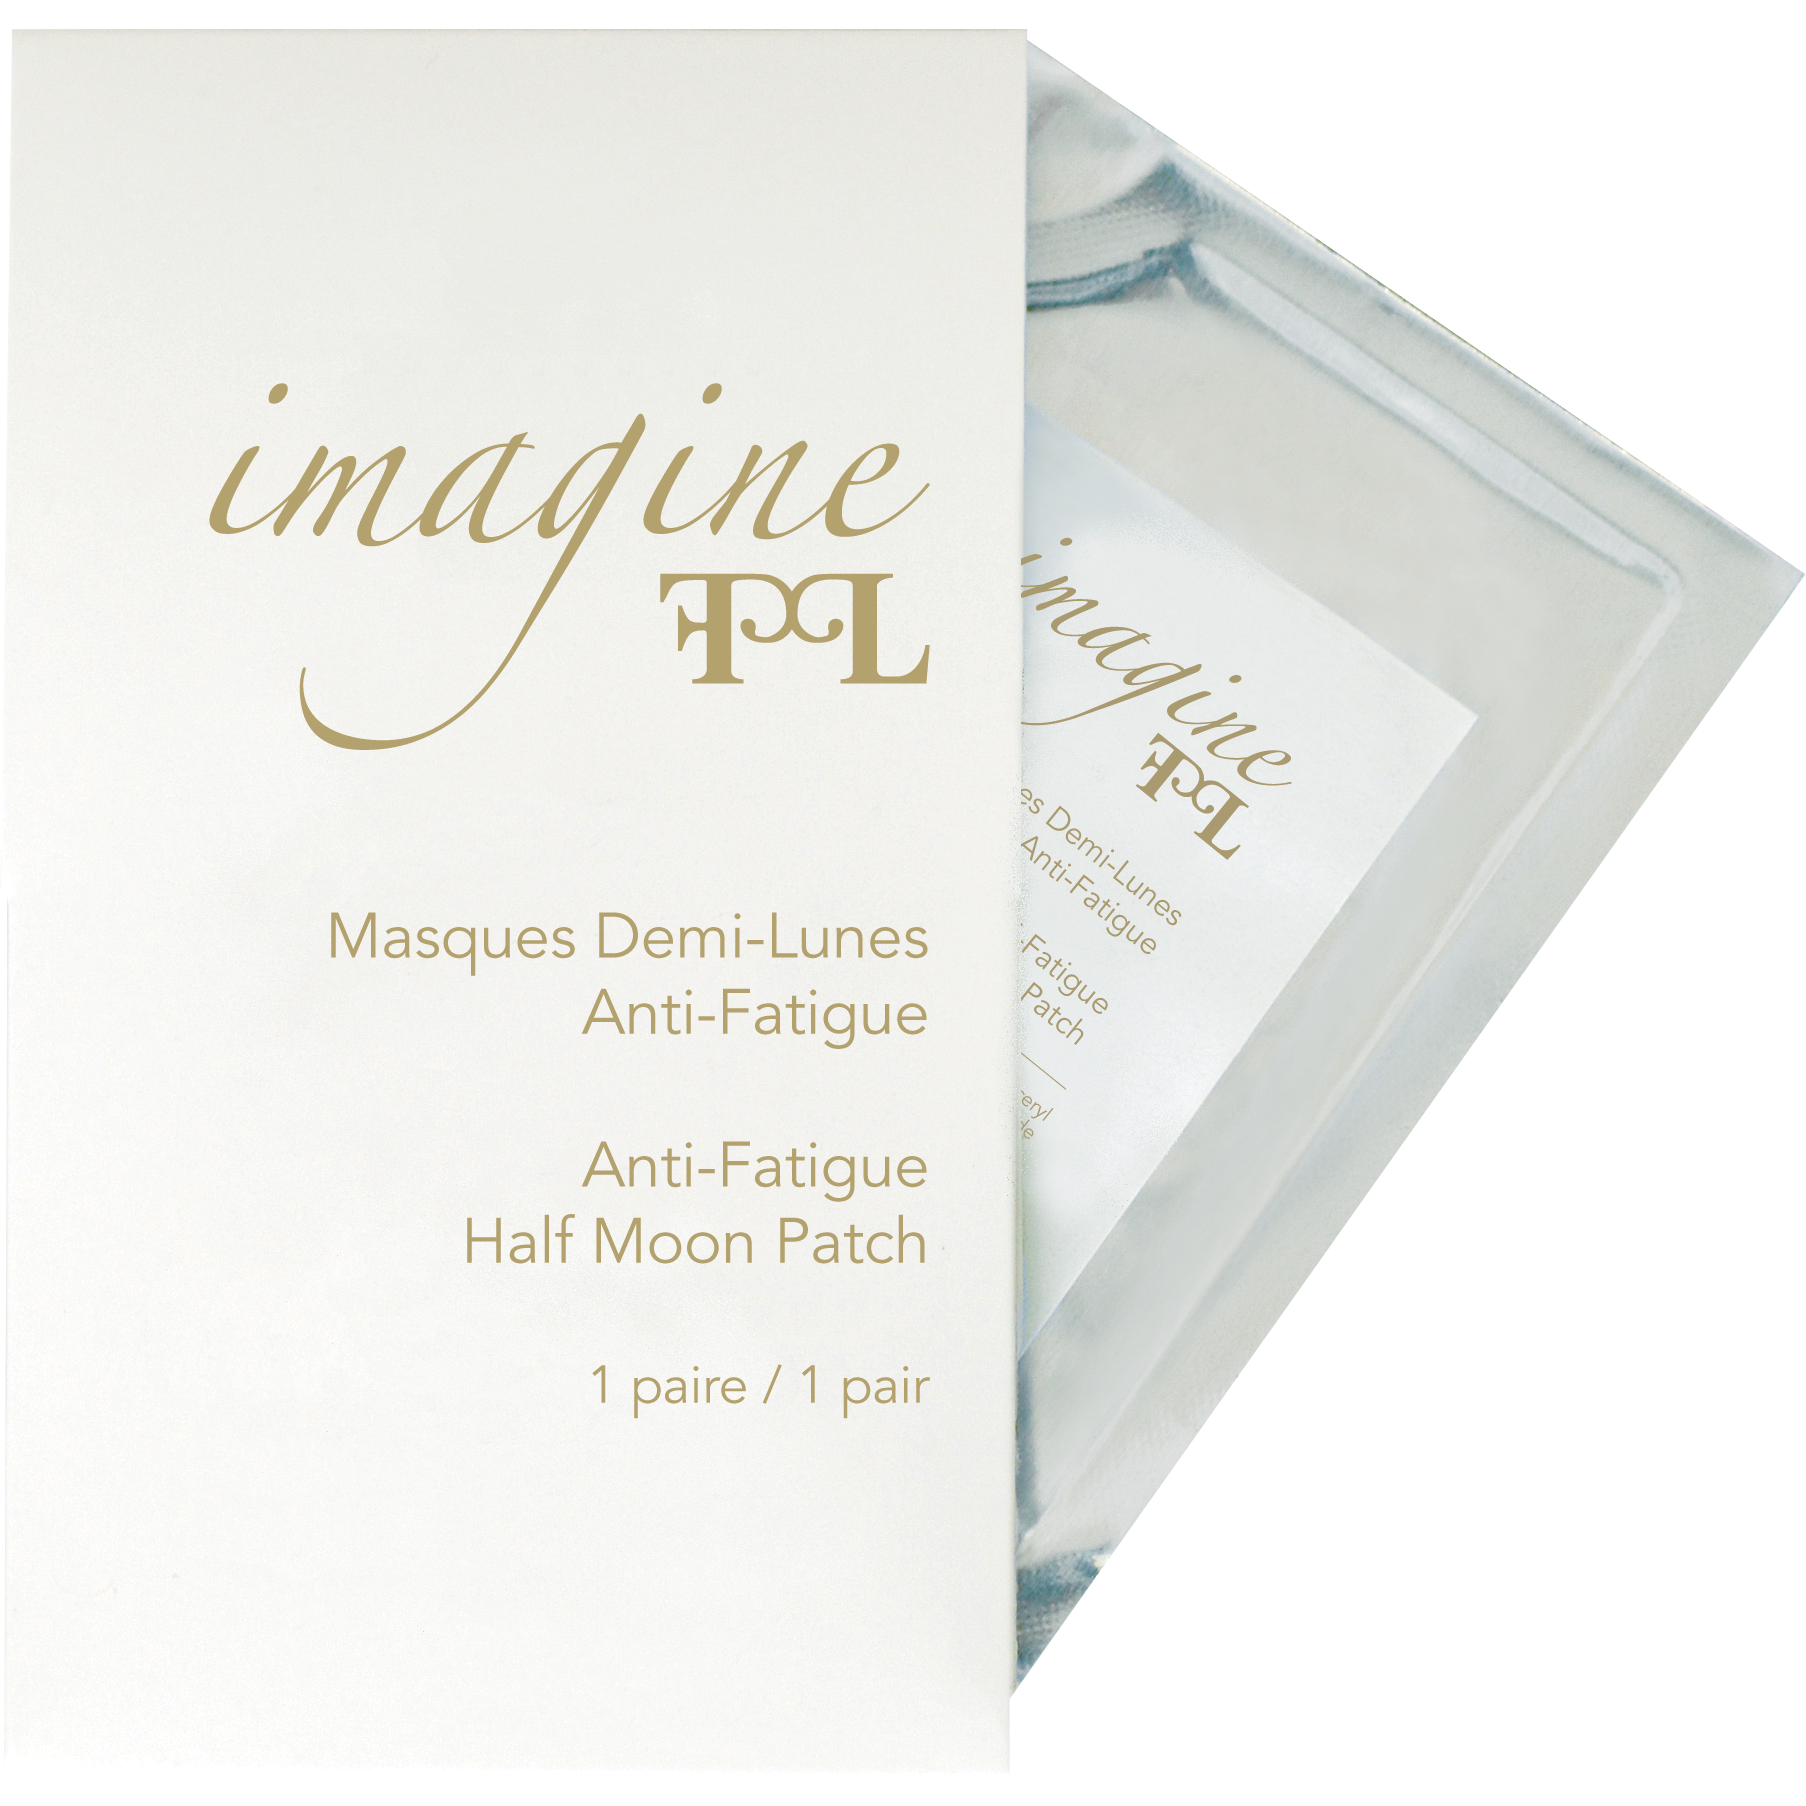 France Laure - Imagine Anti-Fatigue Half Moon Patch - Breizh Esthetic & Salon Supply - 1